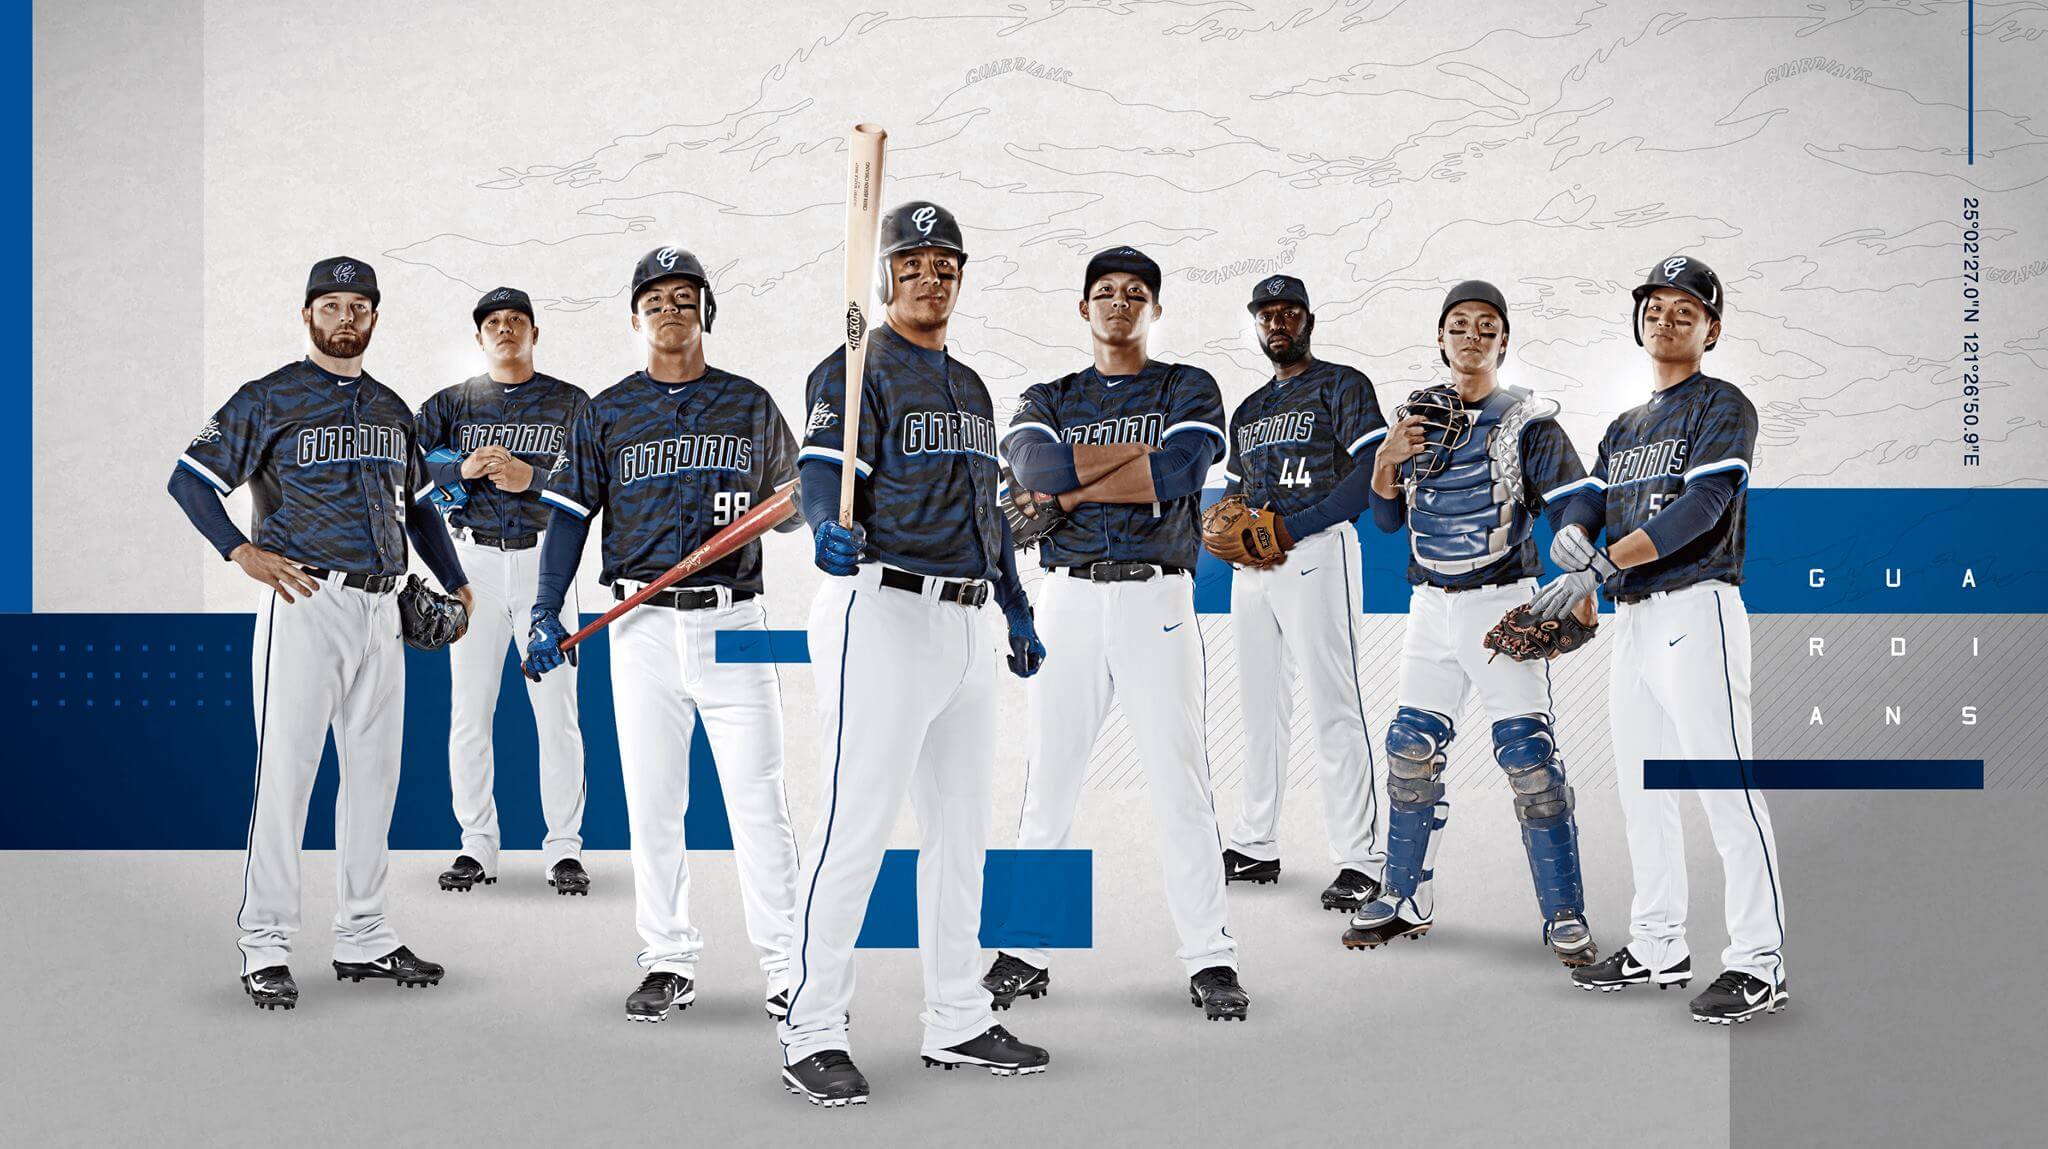 guardians baseball uniforms